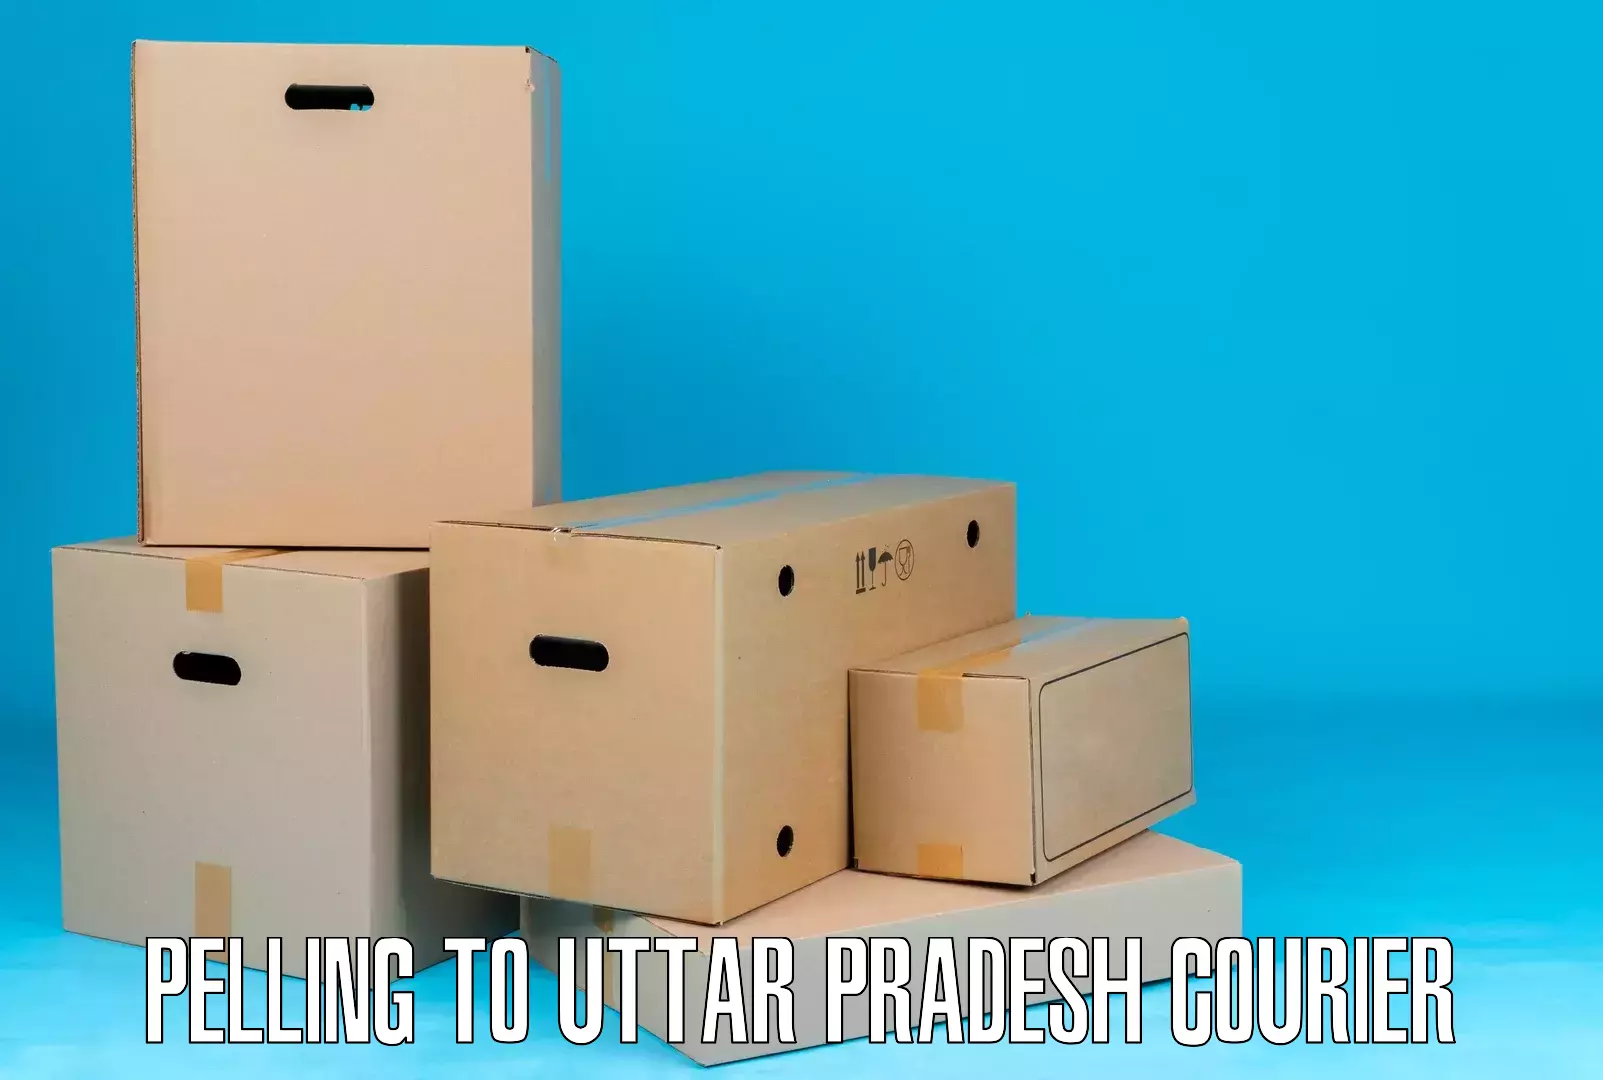 User-friendly courier app Pelling to Uttar Pradesh